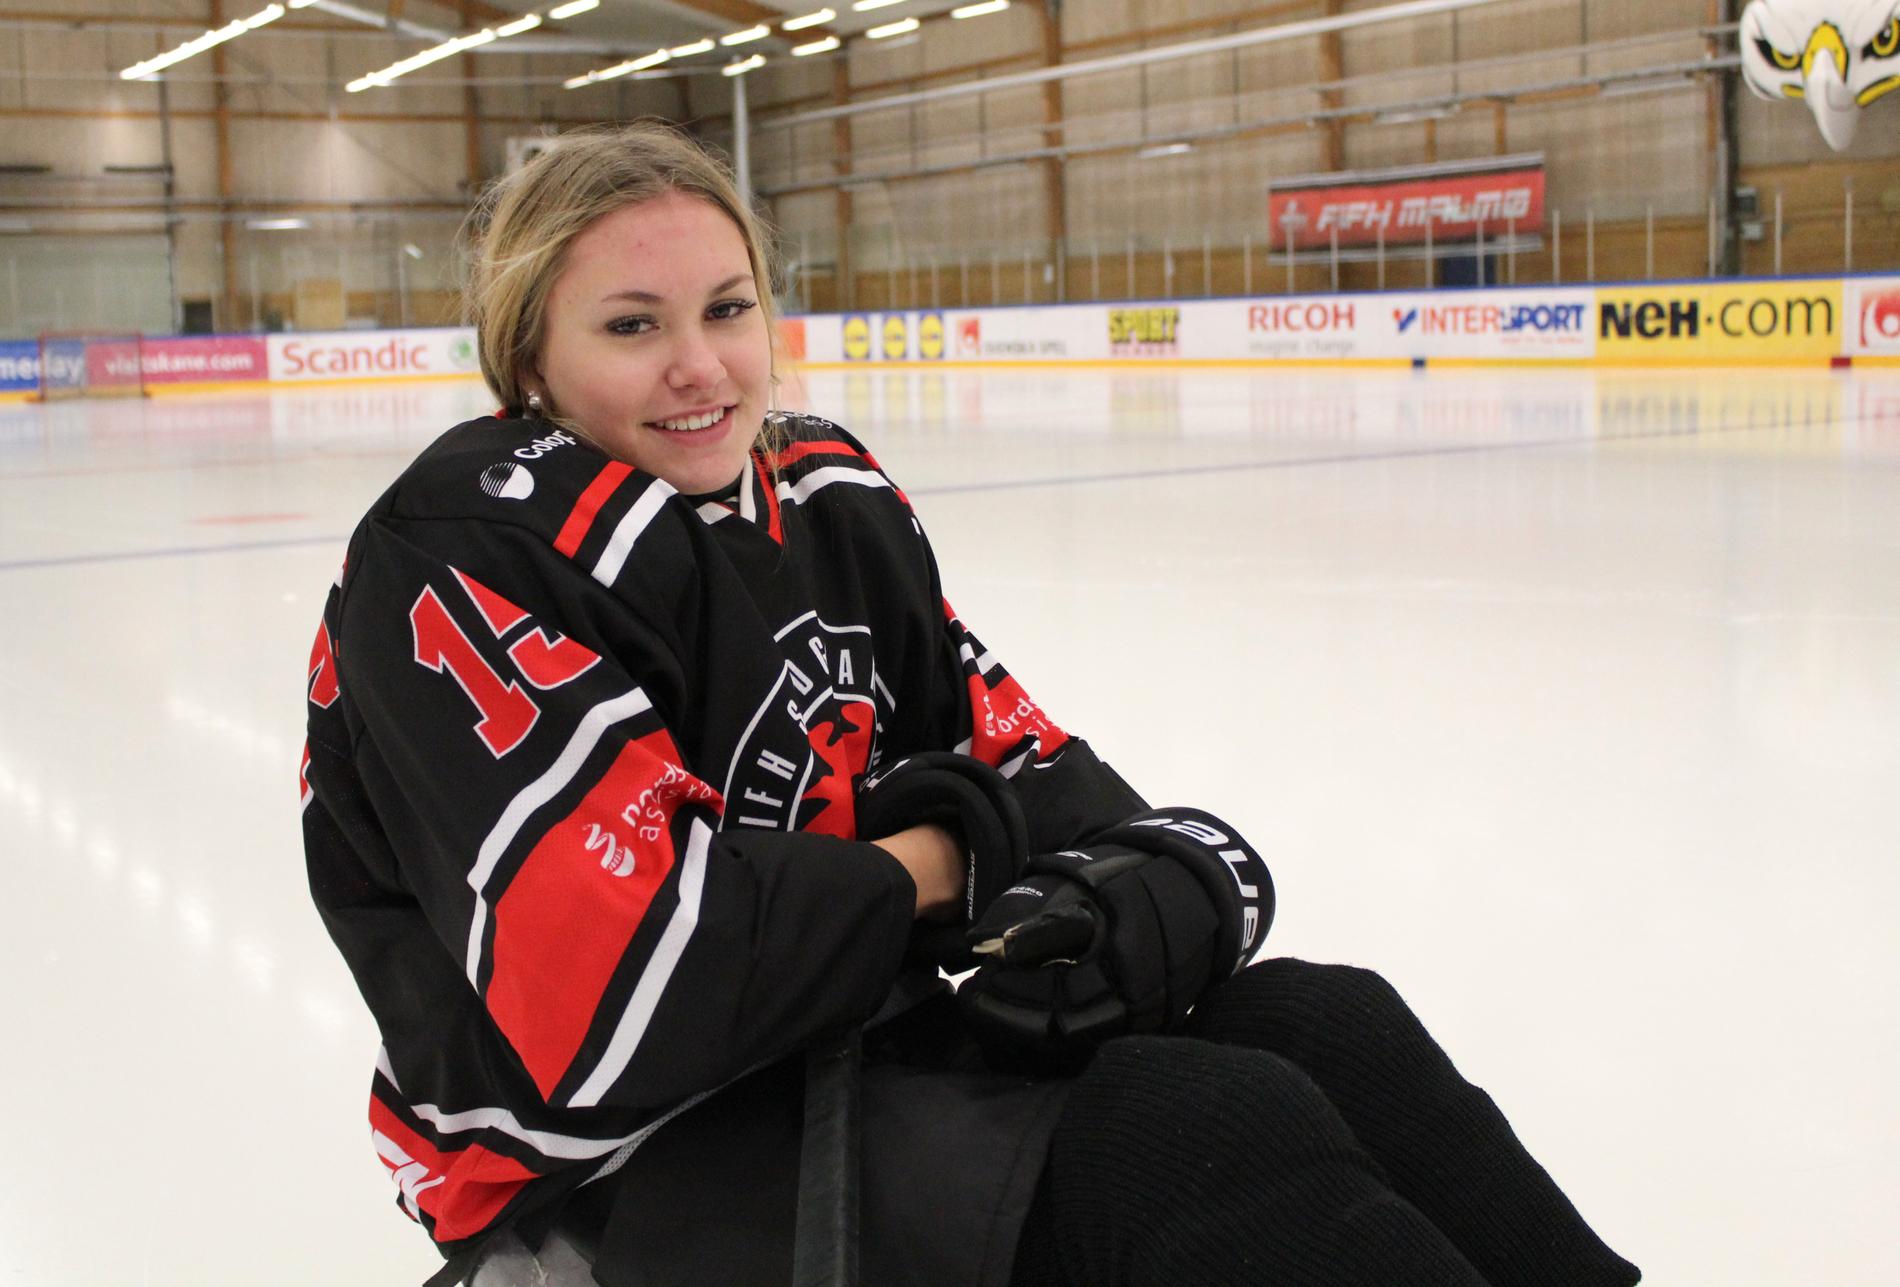 Caroline Persson, parahockeyspelare.